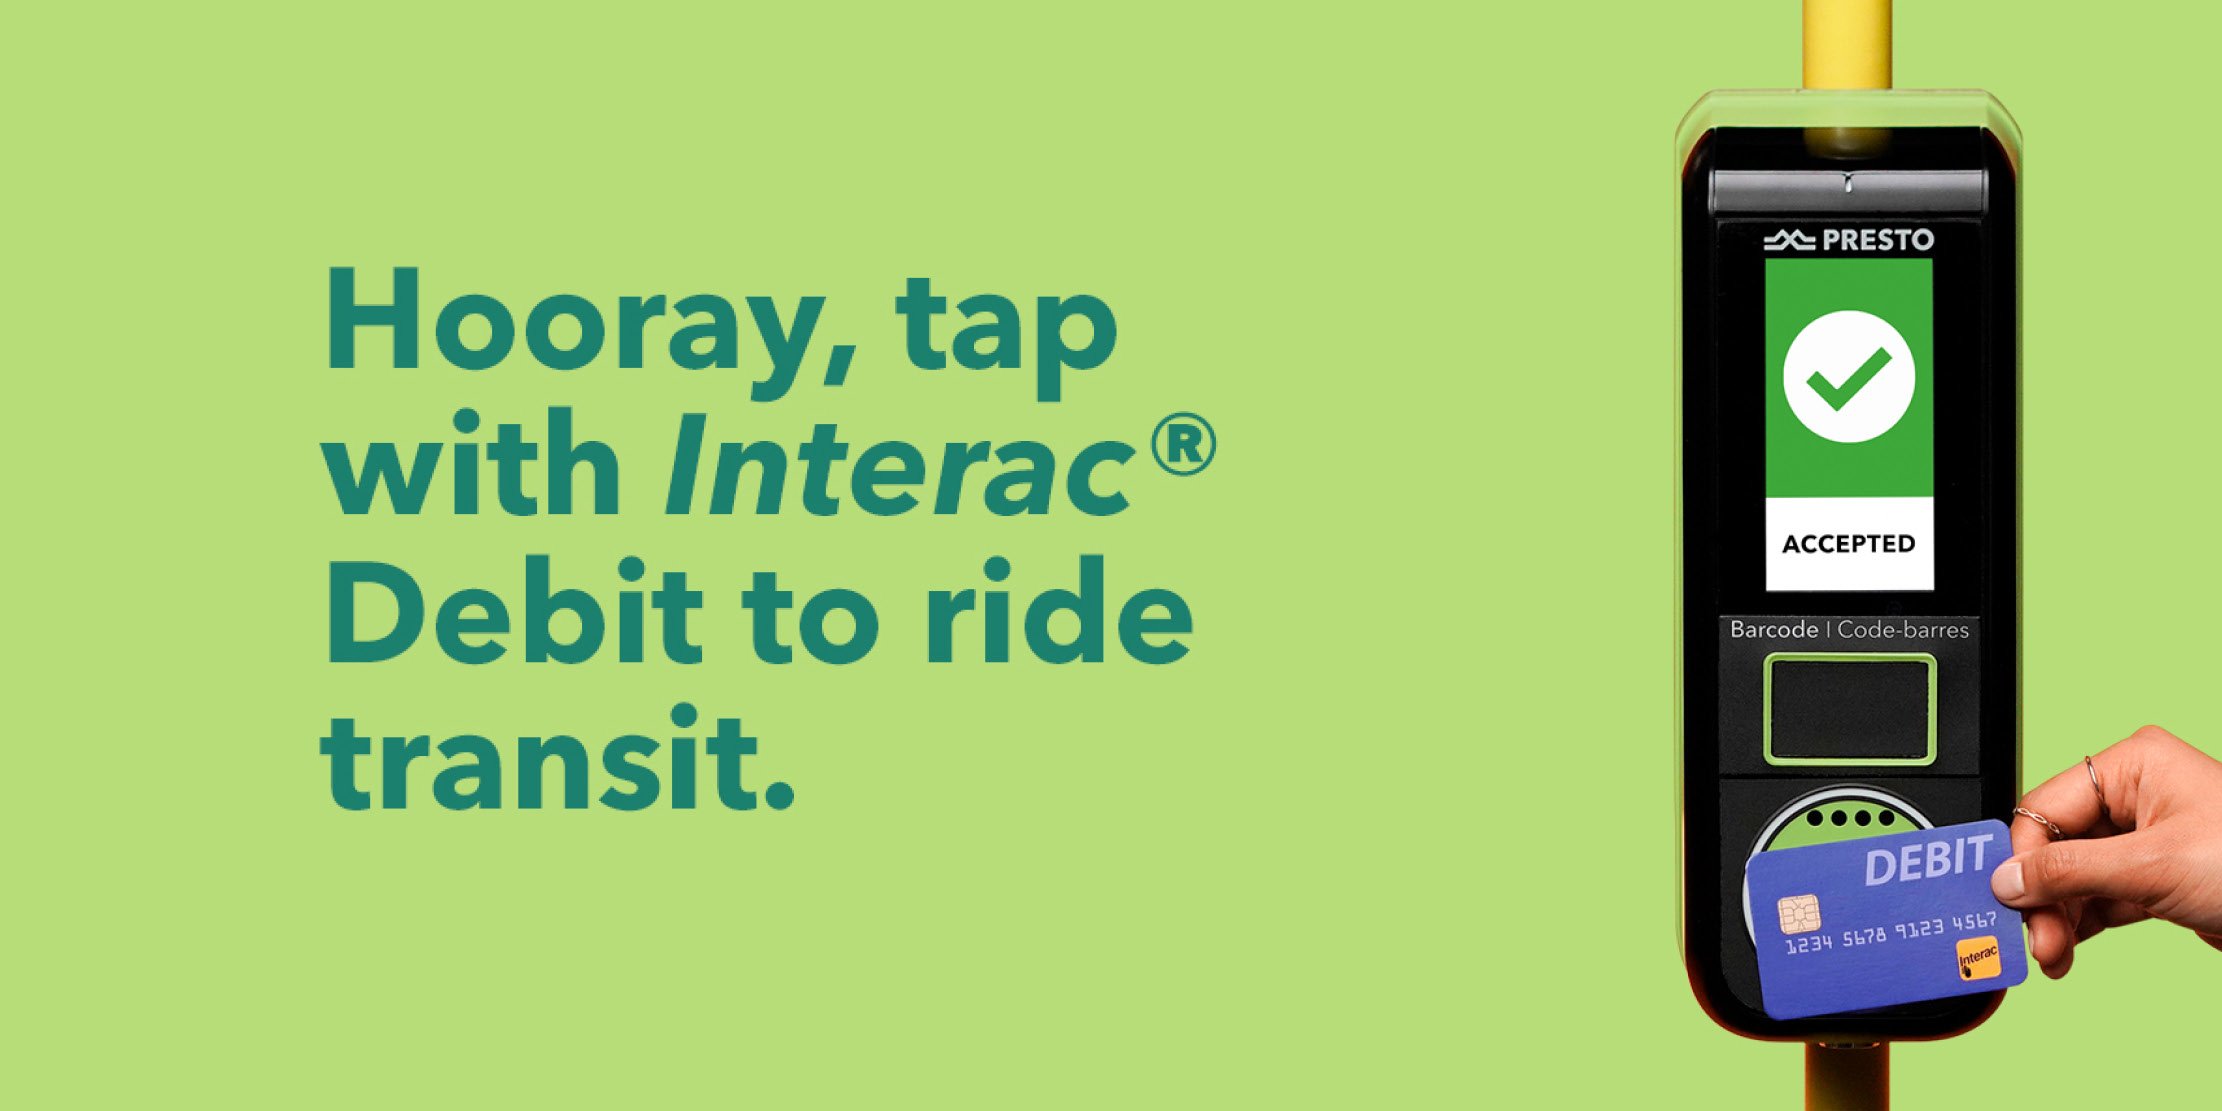 Hooray, tap with Interac Debit to ride transit